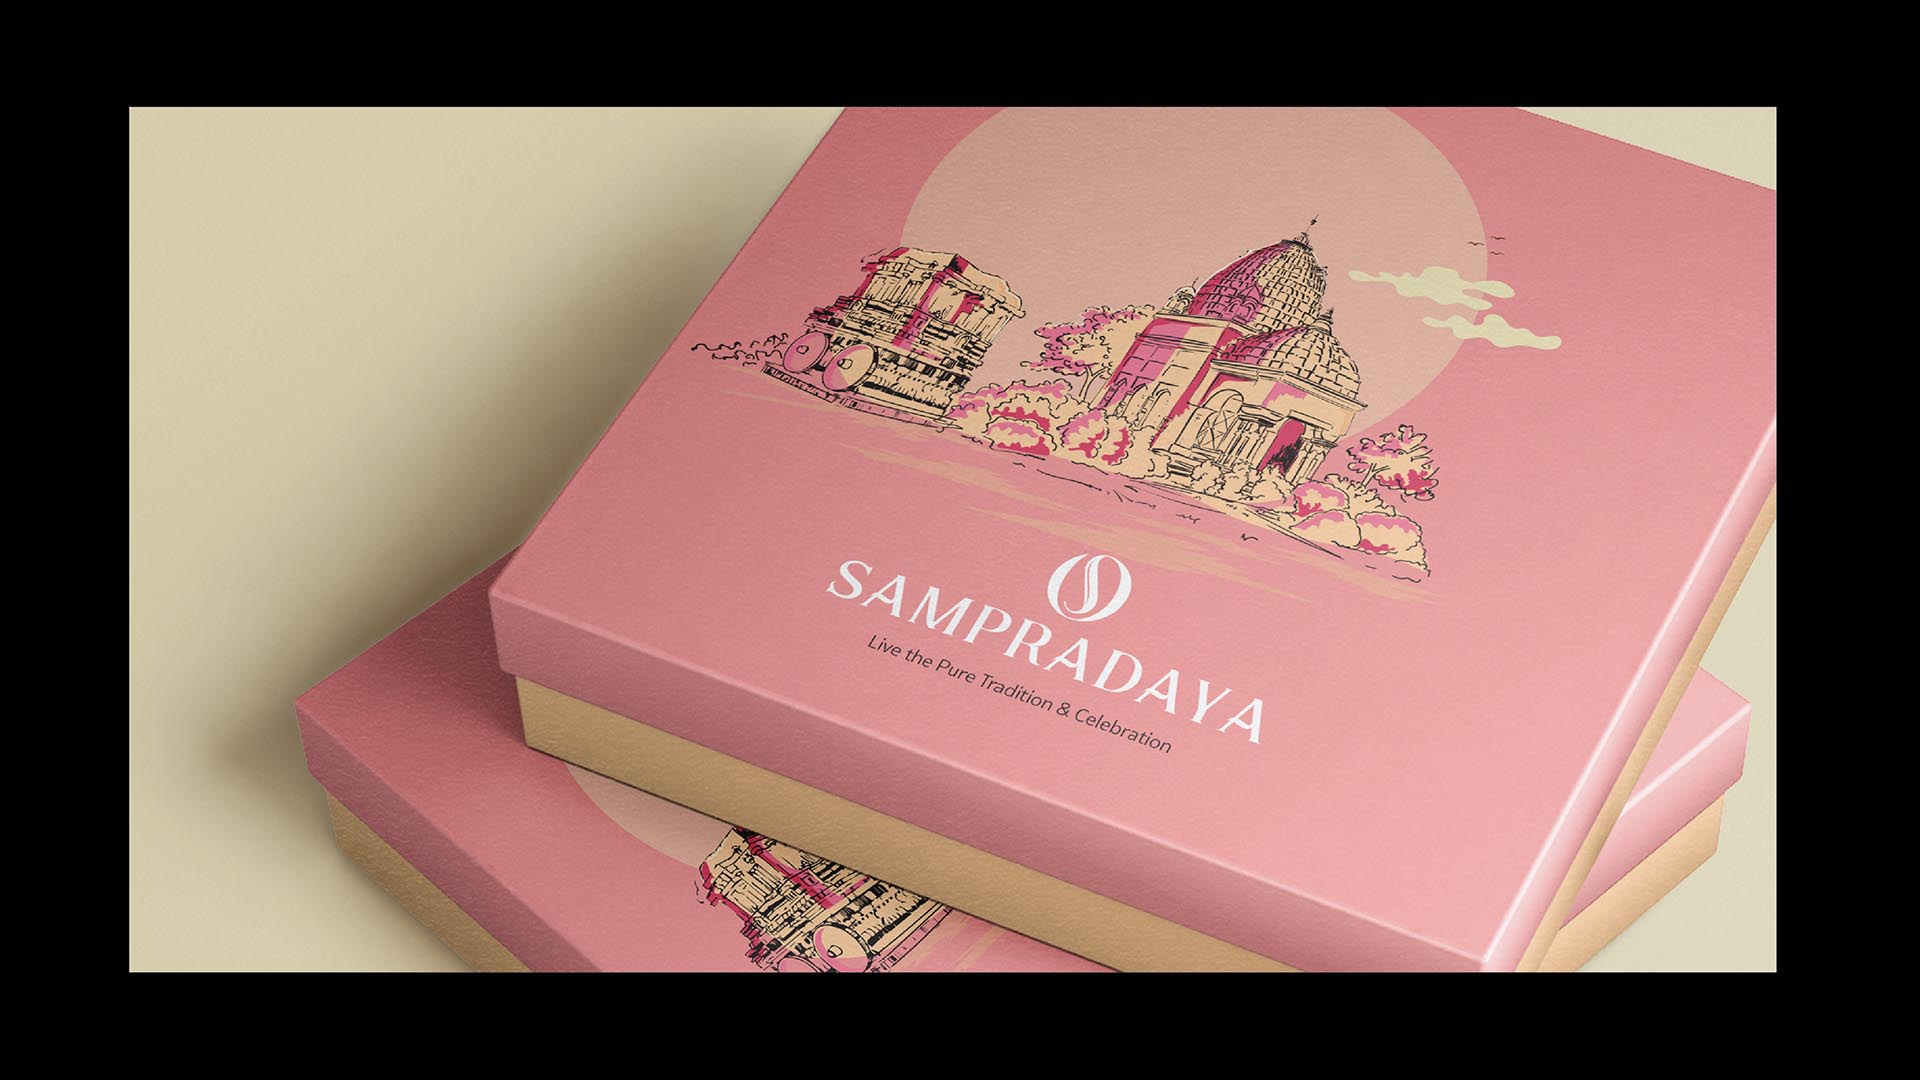 Sampradaya Foods